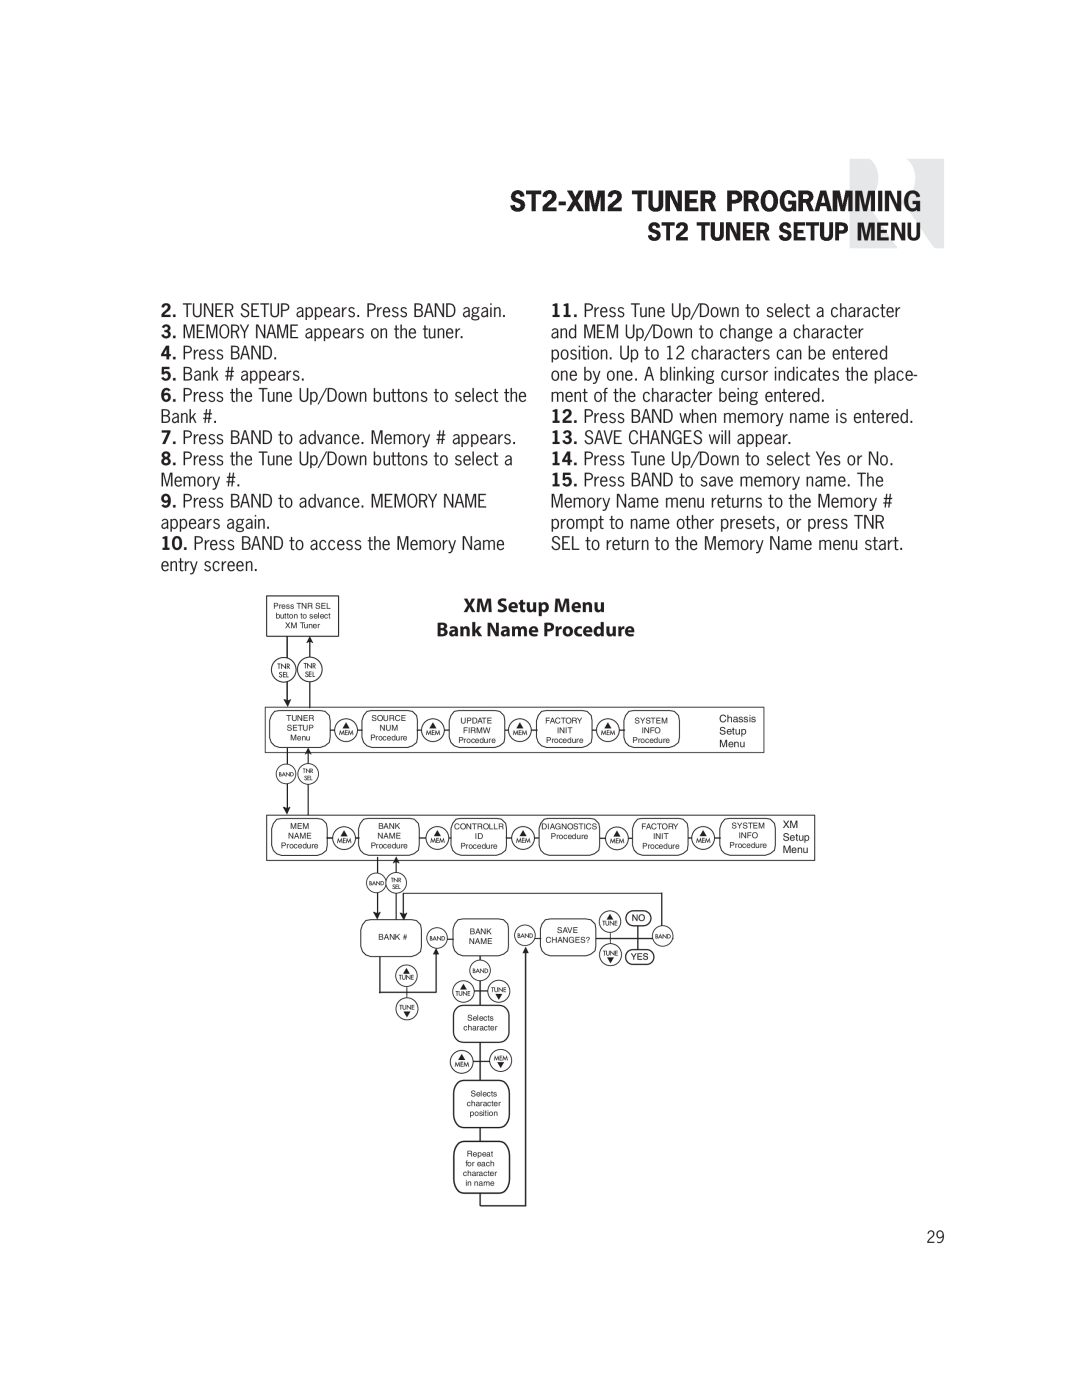 Russound manual XM Setup Menu Bank Name Procedure, ST2-XM2TUNER PROGRAMMING, ST2 TUNER SETUP MENU 